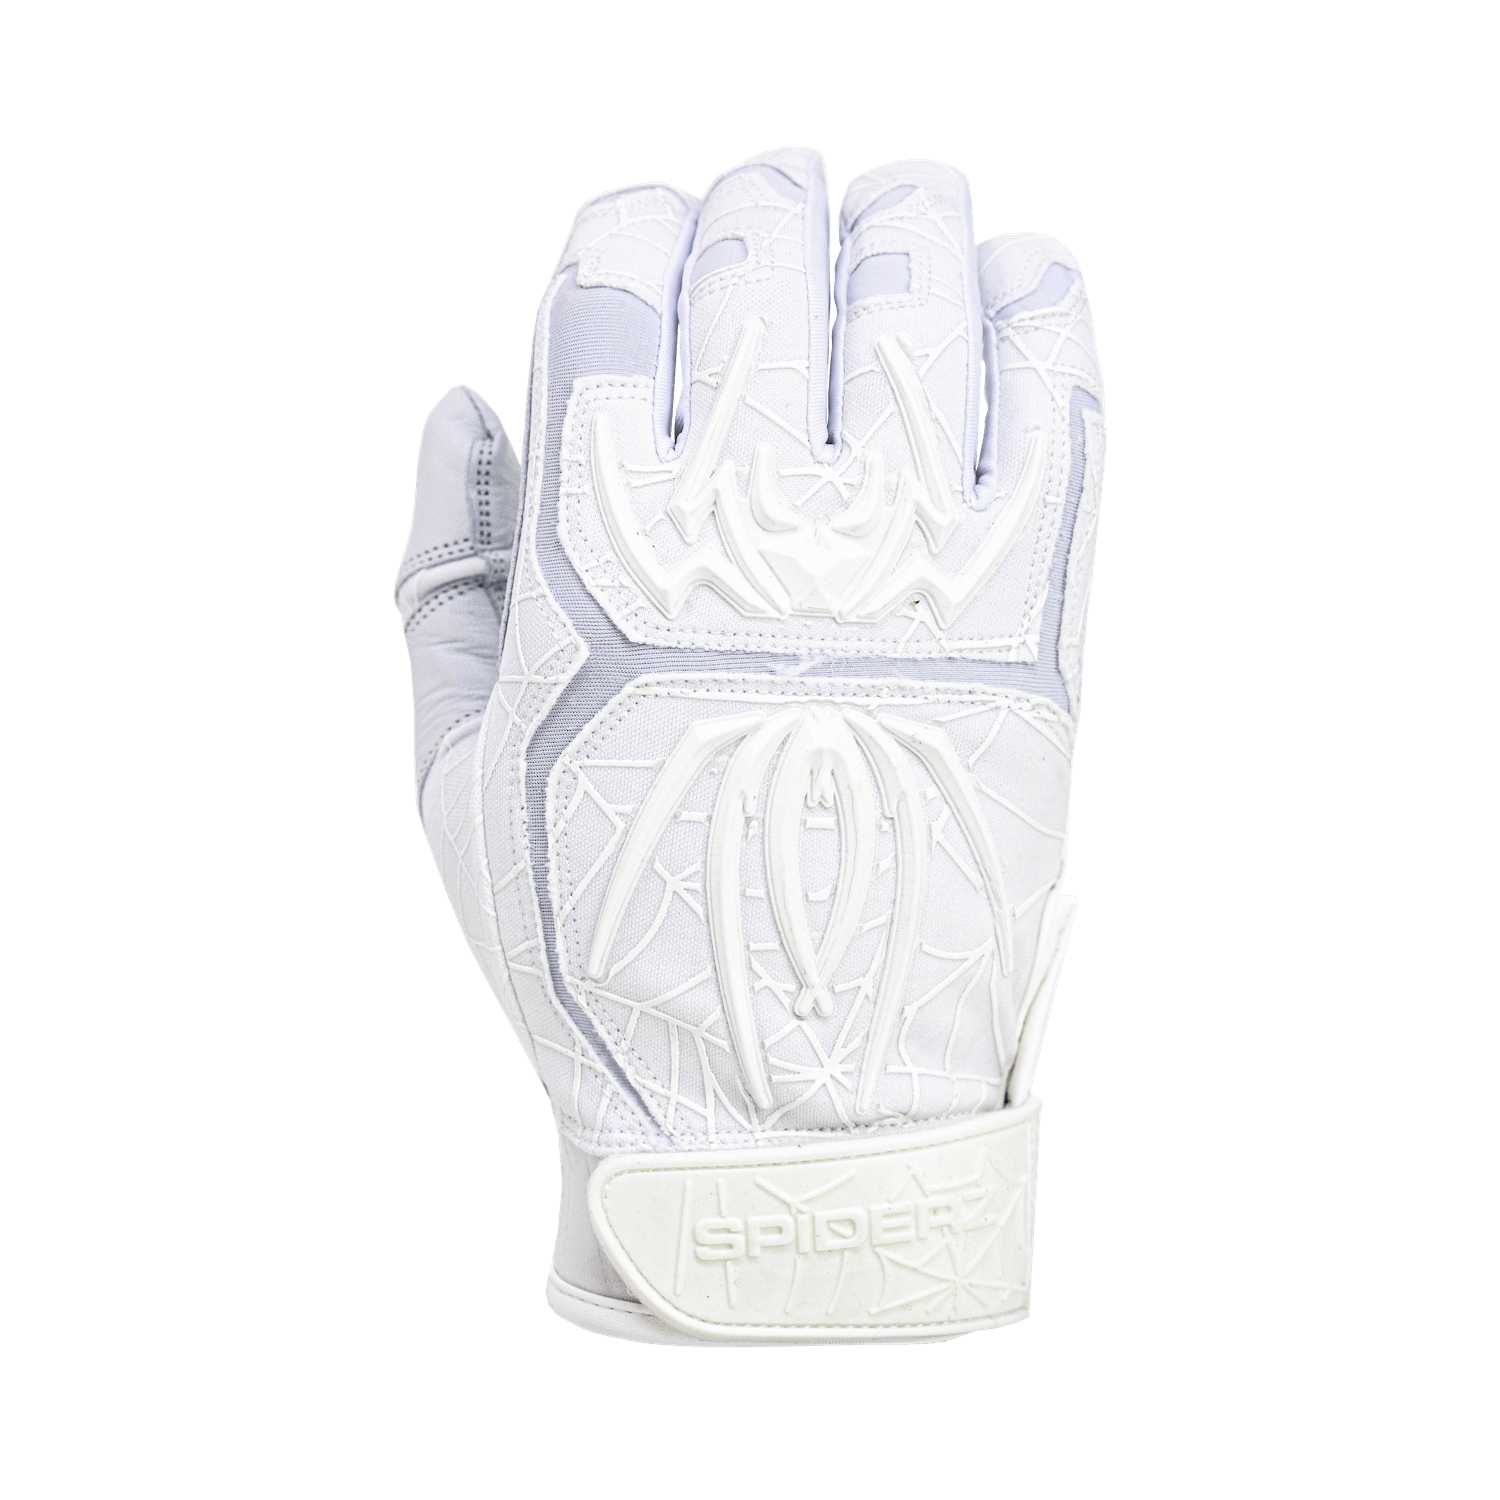 '23 Custom Batting Gloves - Internal